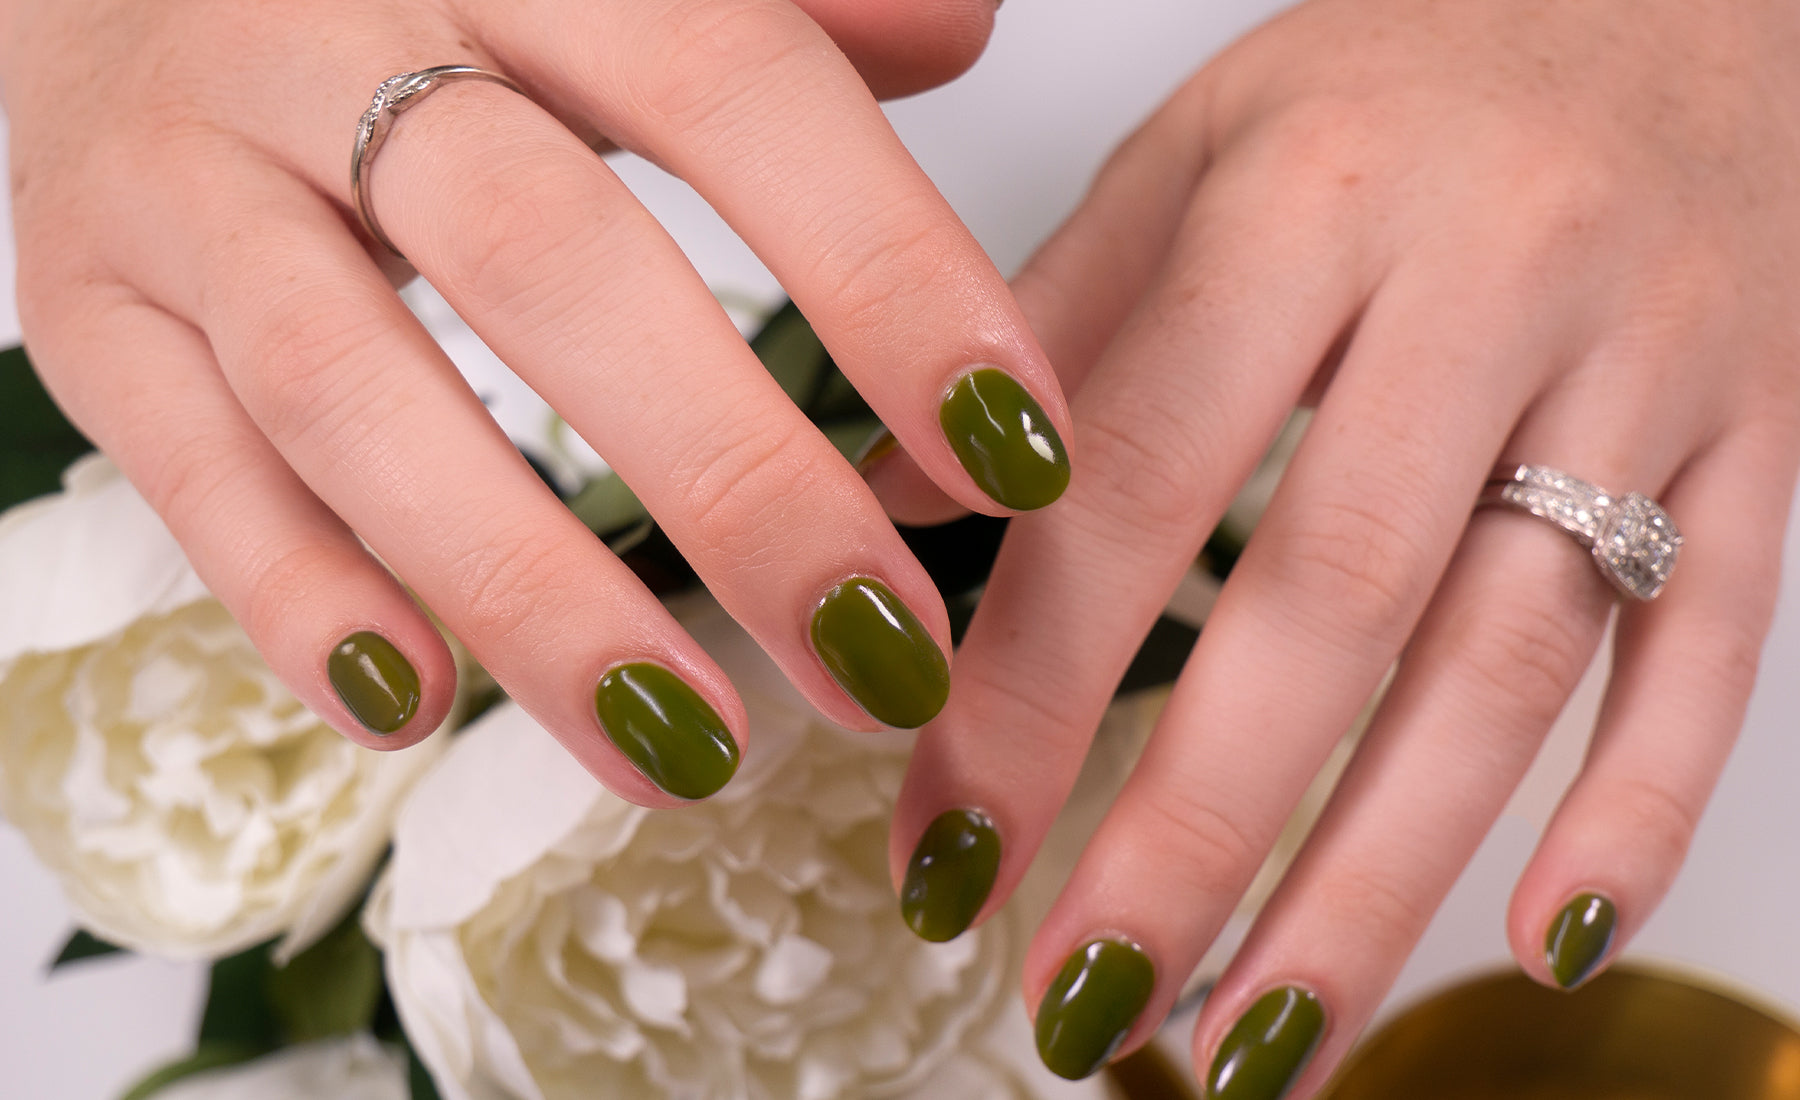 Wild Child gel nail polish - photographed in Australia on model